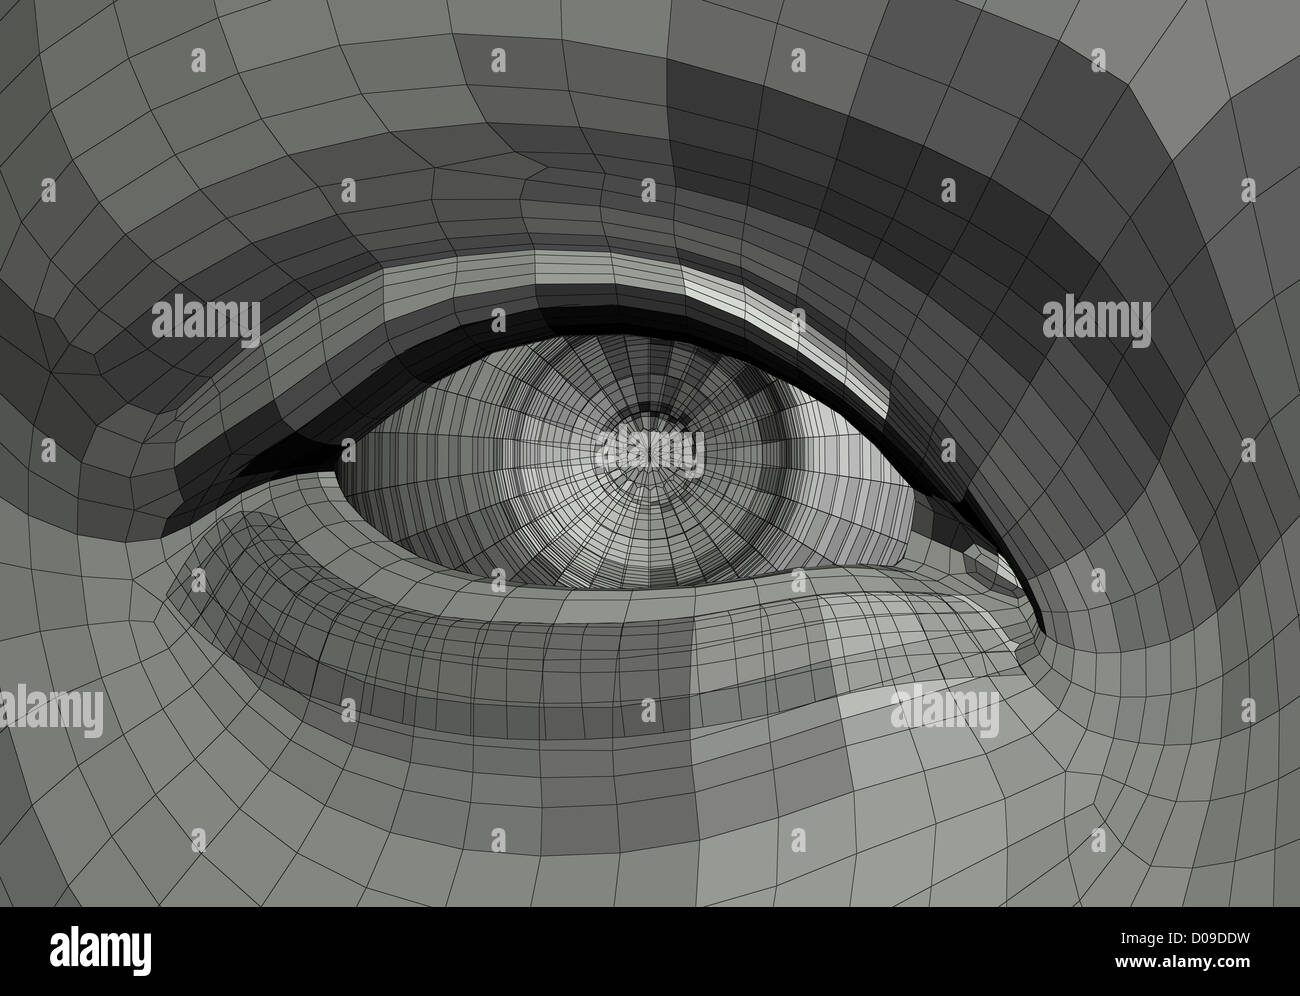 Mechanical human eye wire frame 3d illustration. Stock Photo